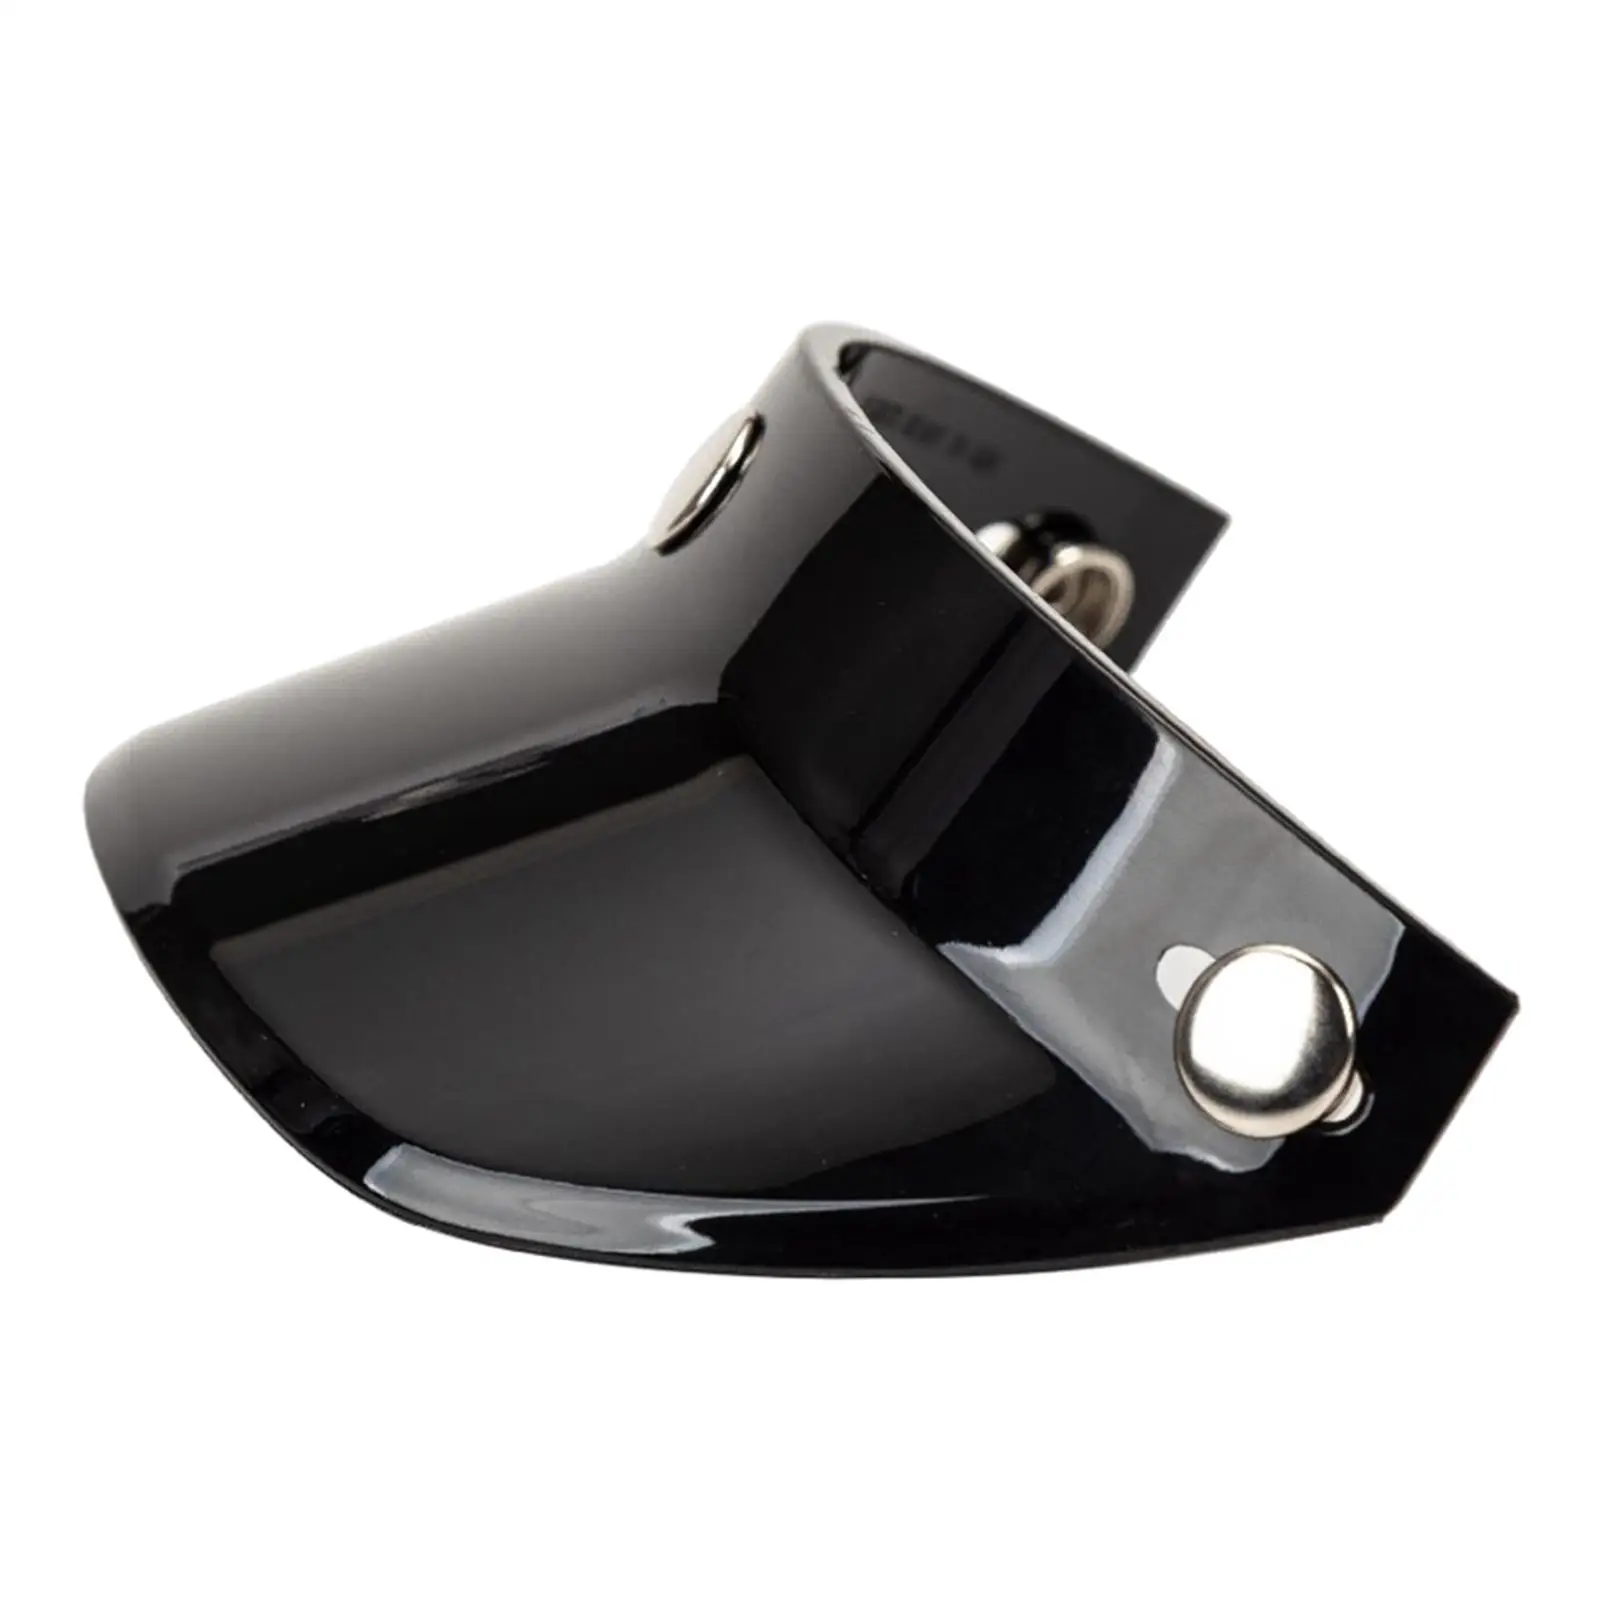 2X Motorcycle Peak Shield for 3 Snap Scratch Resistant for 3/4 Helmets Black